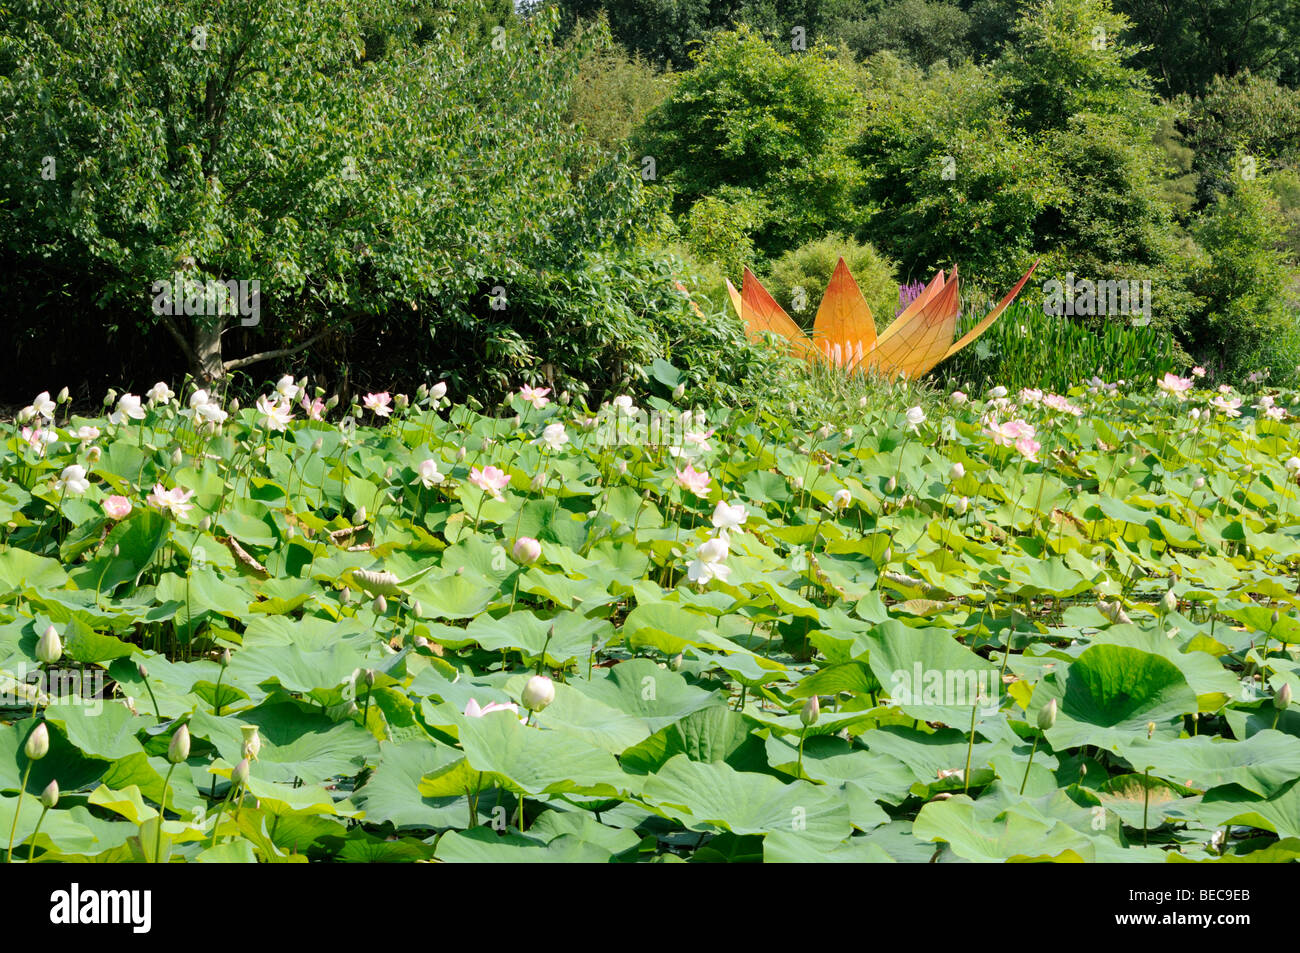 Lotosblume, Arboretum Ellerhoop, Deutschland. -Lotus Blume, Arboretum Ellerhoop, Deutschland. Stockfoto